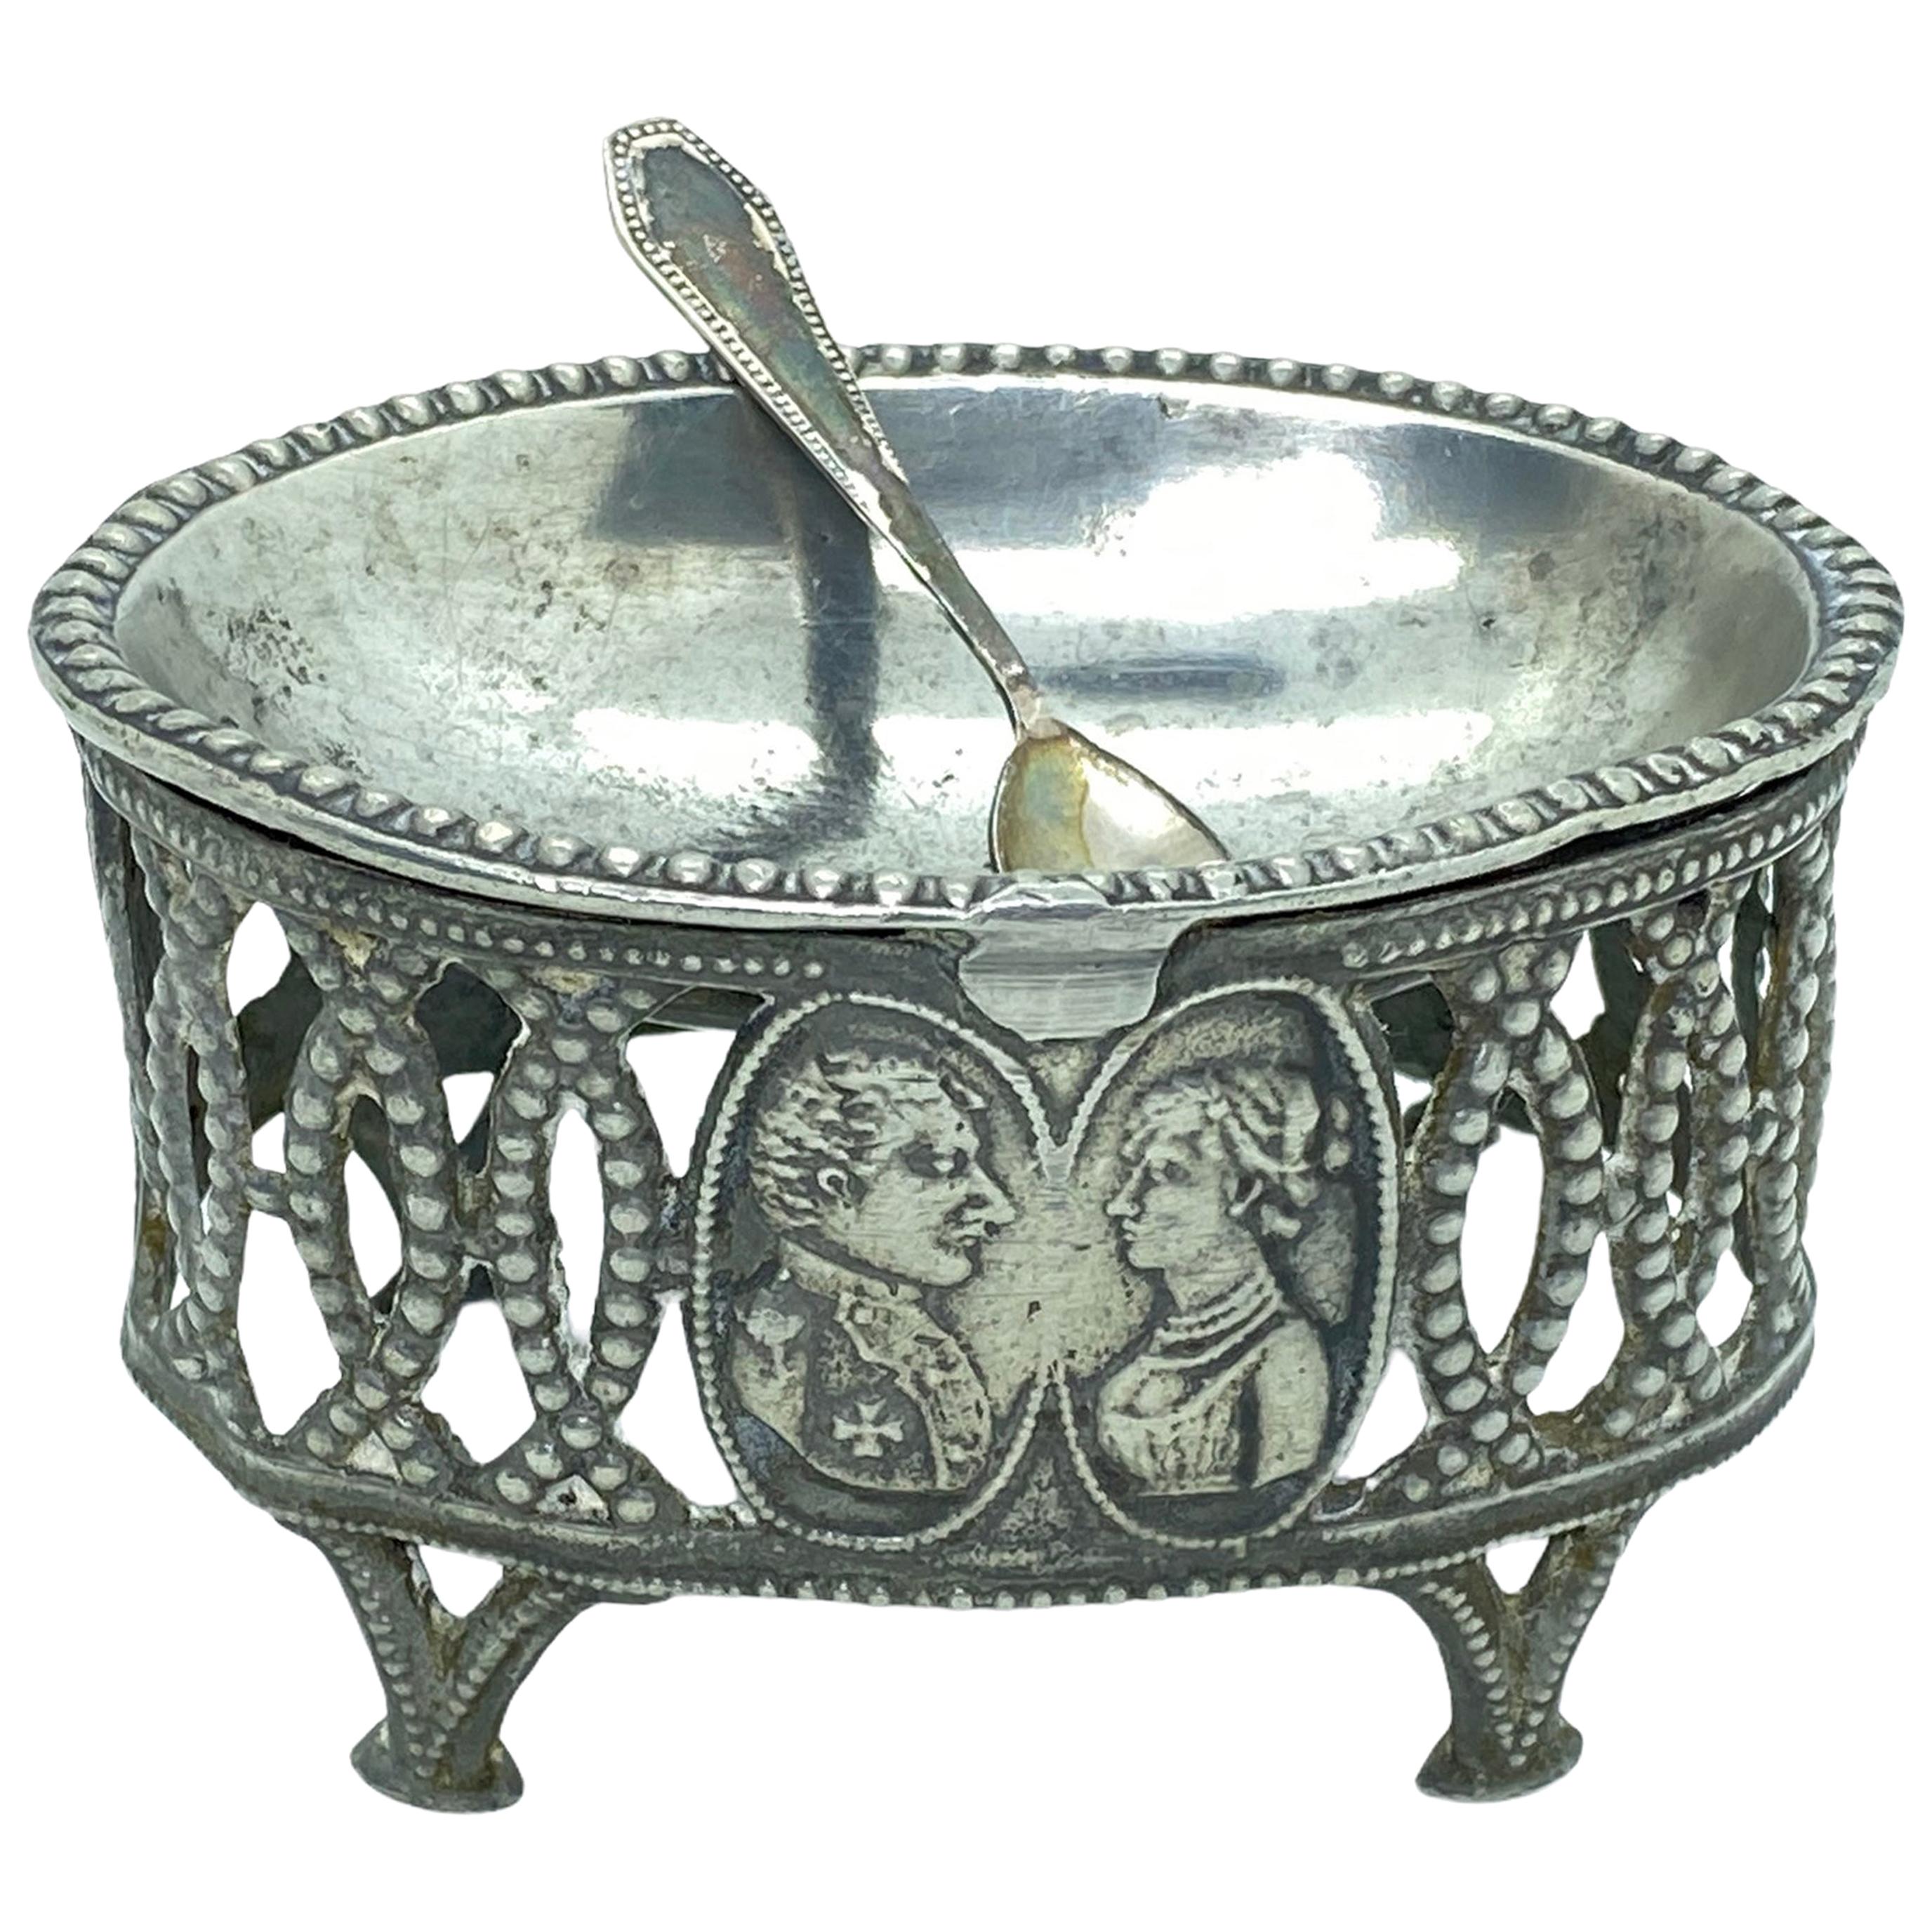 Vintage Silver Plate Open Salt Pot Catchall, 1880s, Germany or Austria